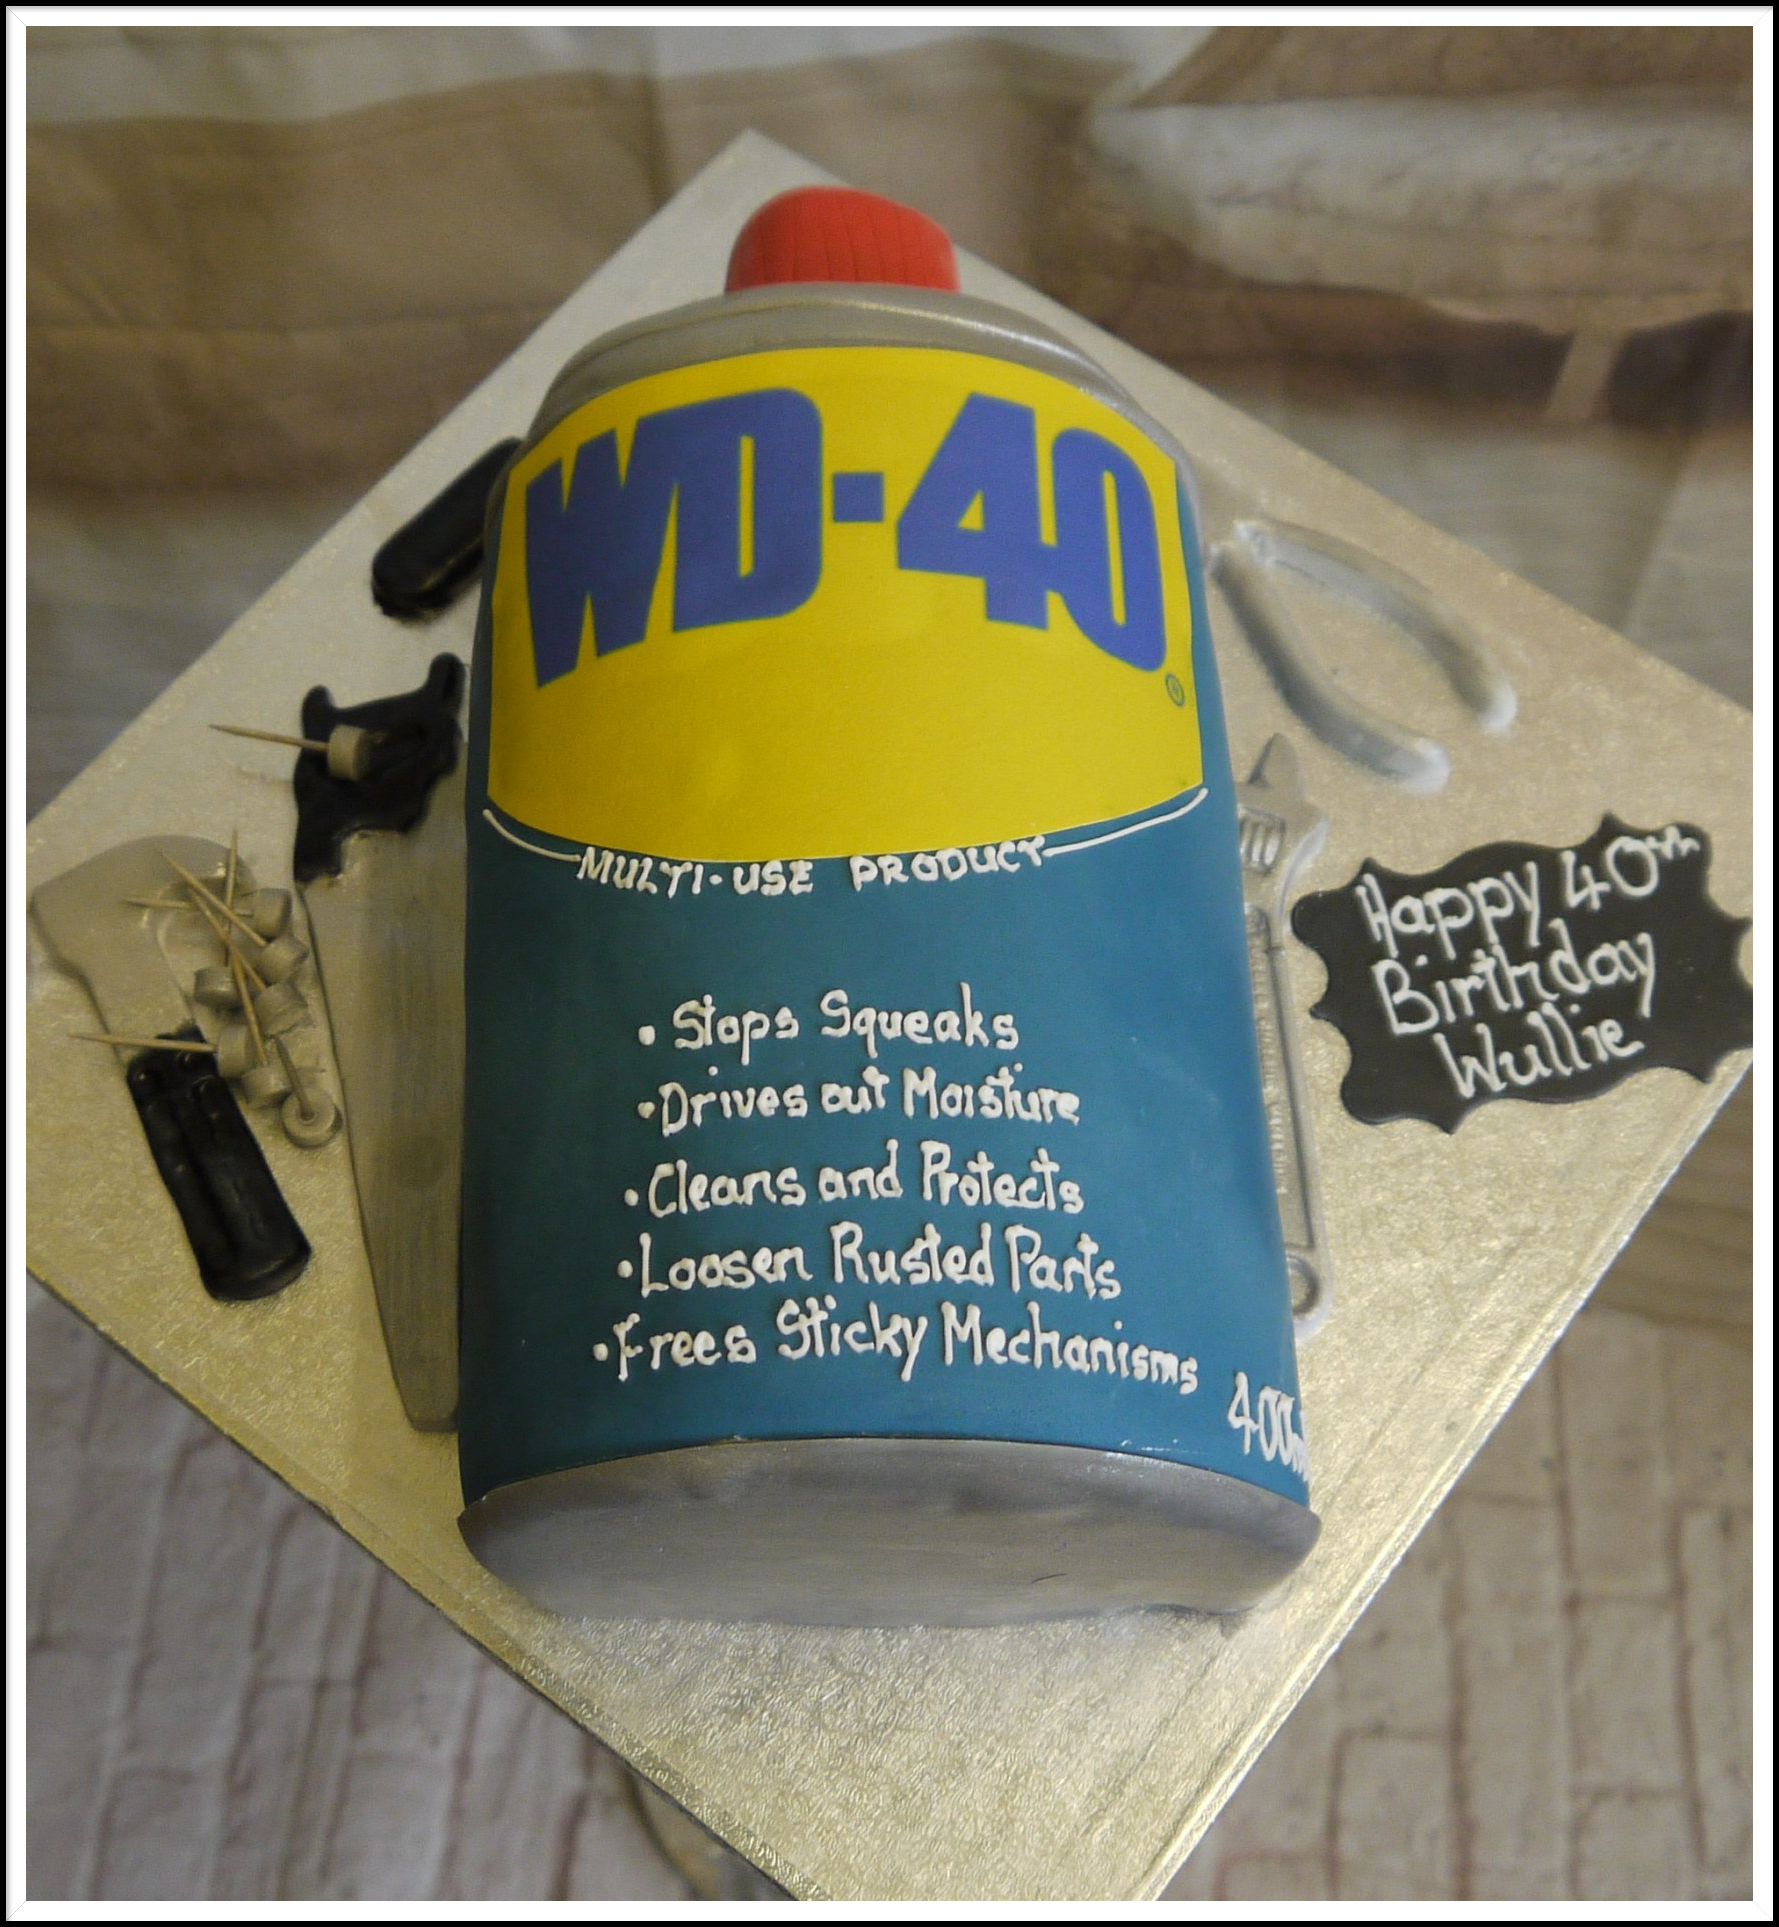 WD40 birthday cake